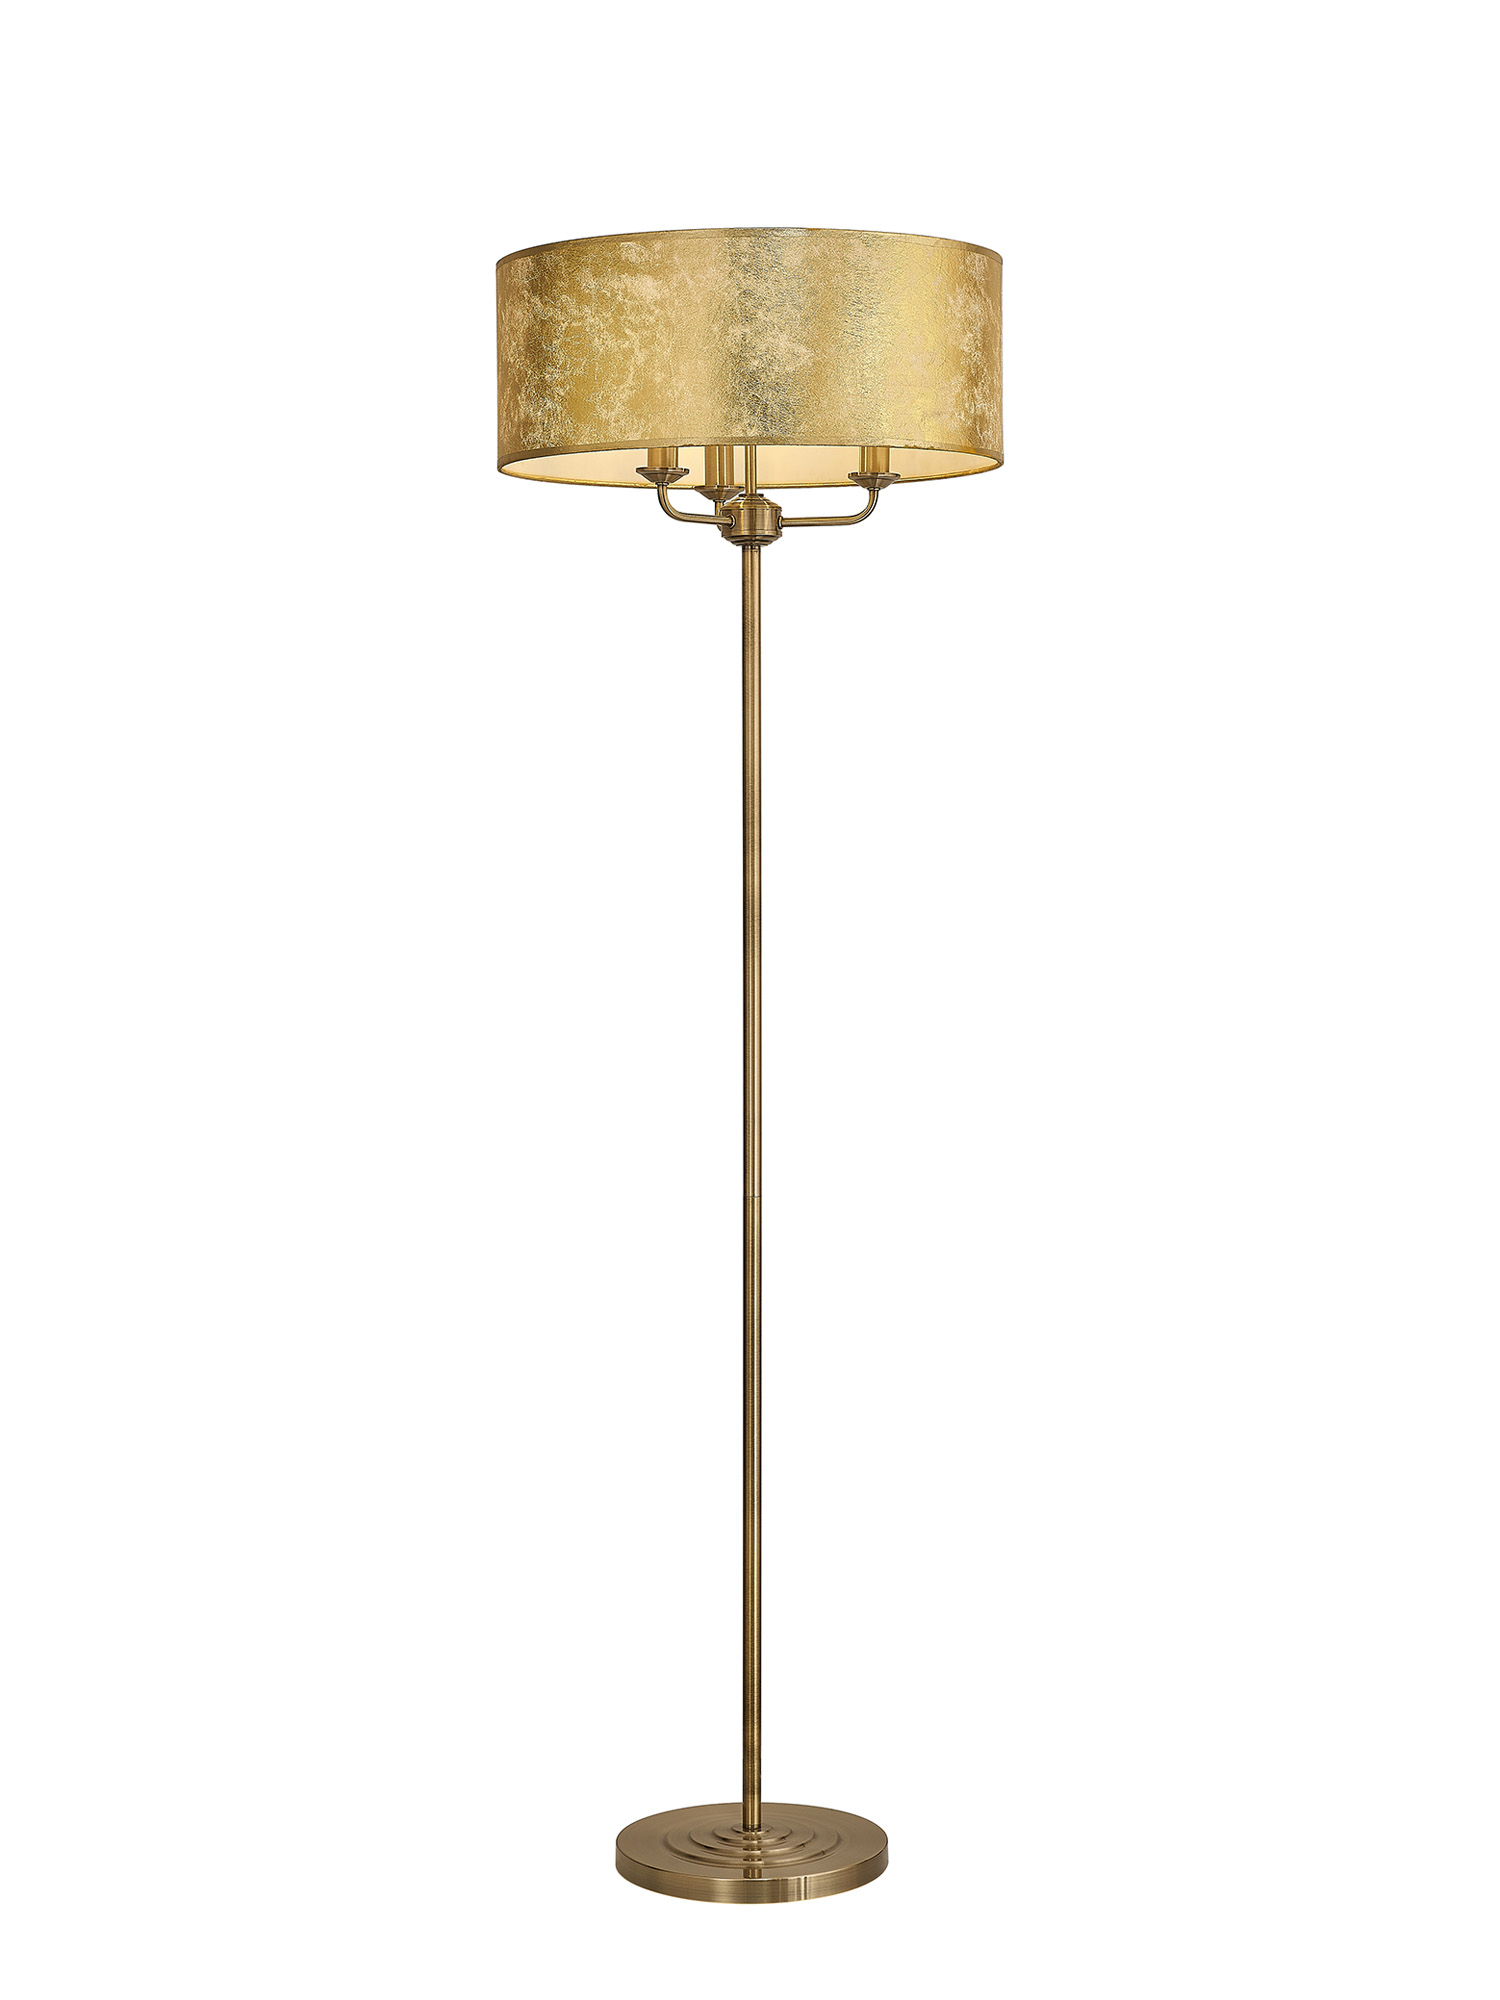 DK0919  Banyan 45cm 3 Light Floor Lamp Antique Brass, Gold Leaf